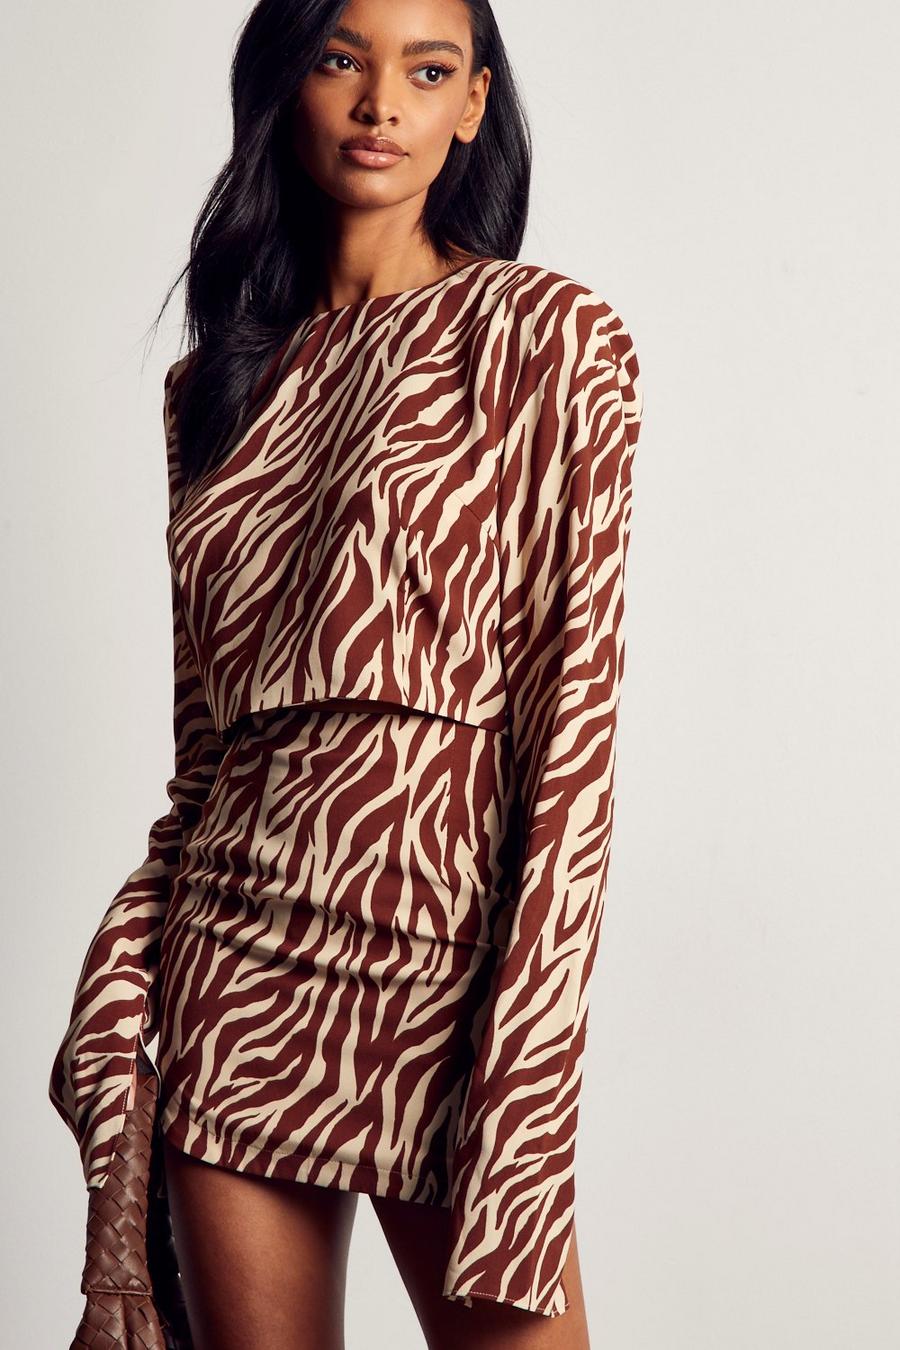 Brown Zebra Print Shoulder Pad Top Skirt Co-ord